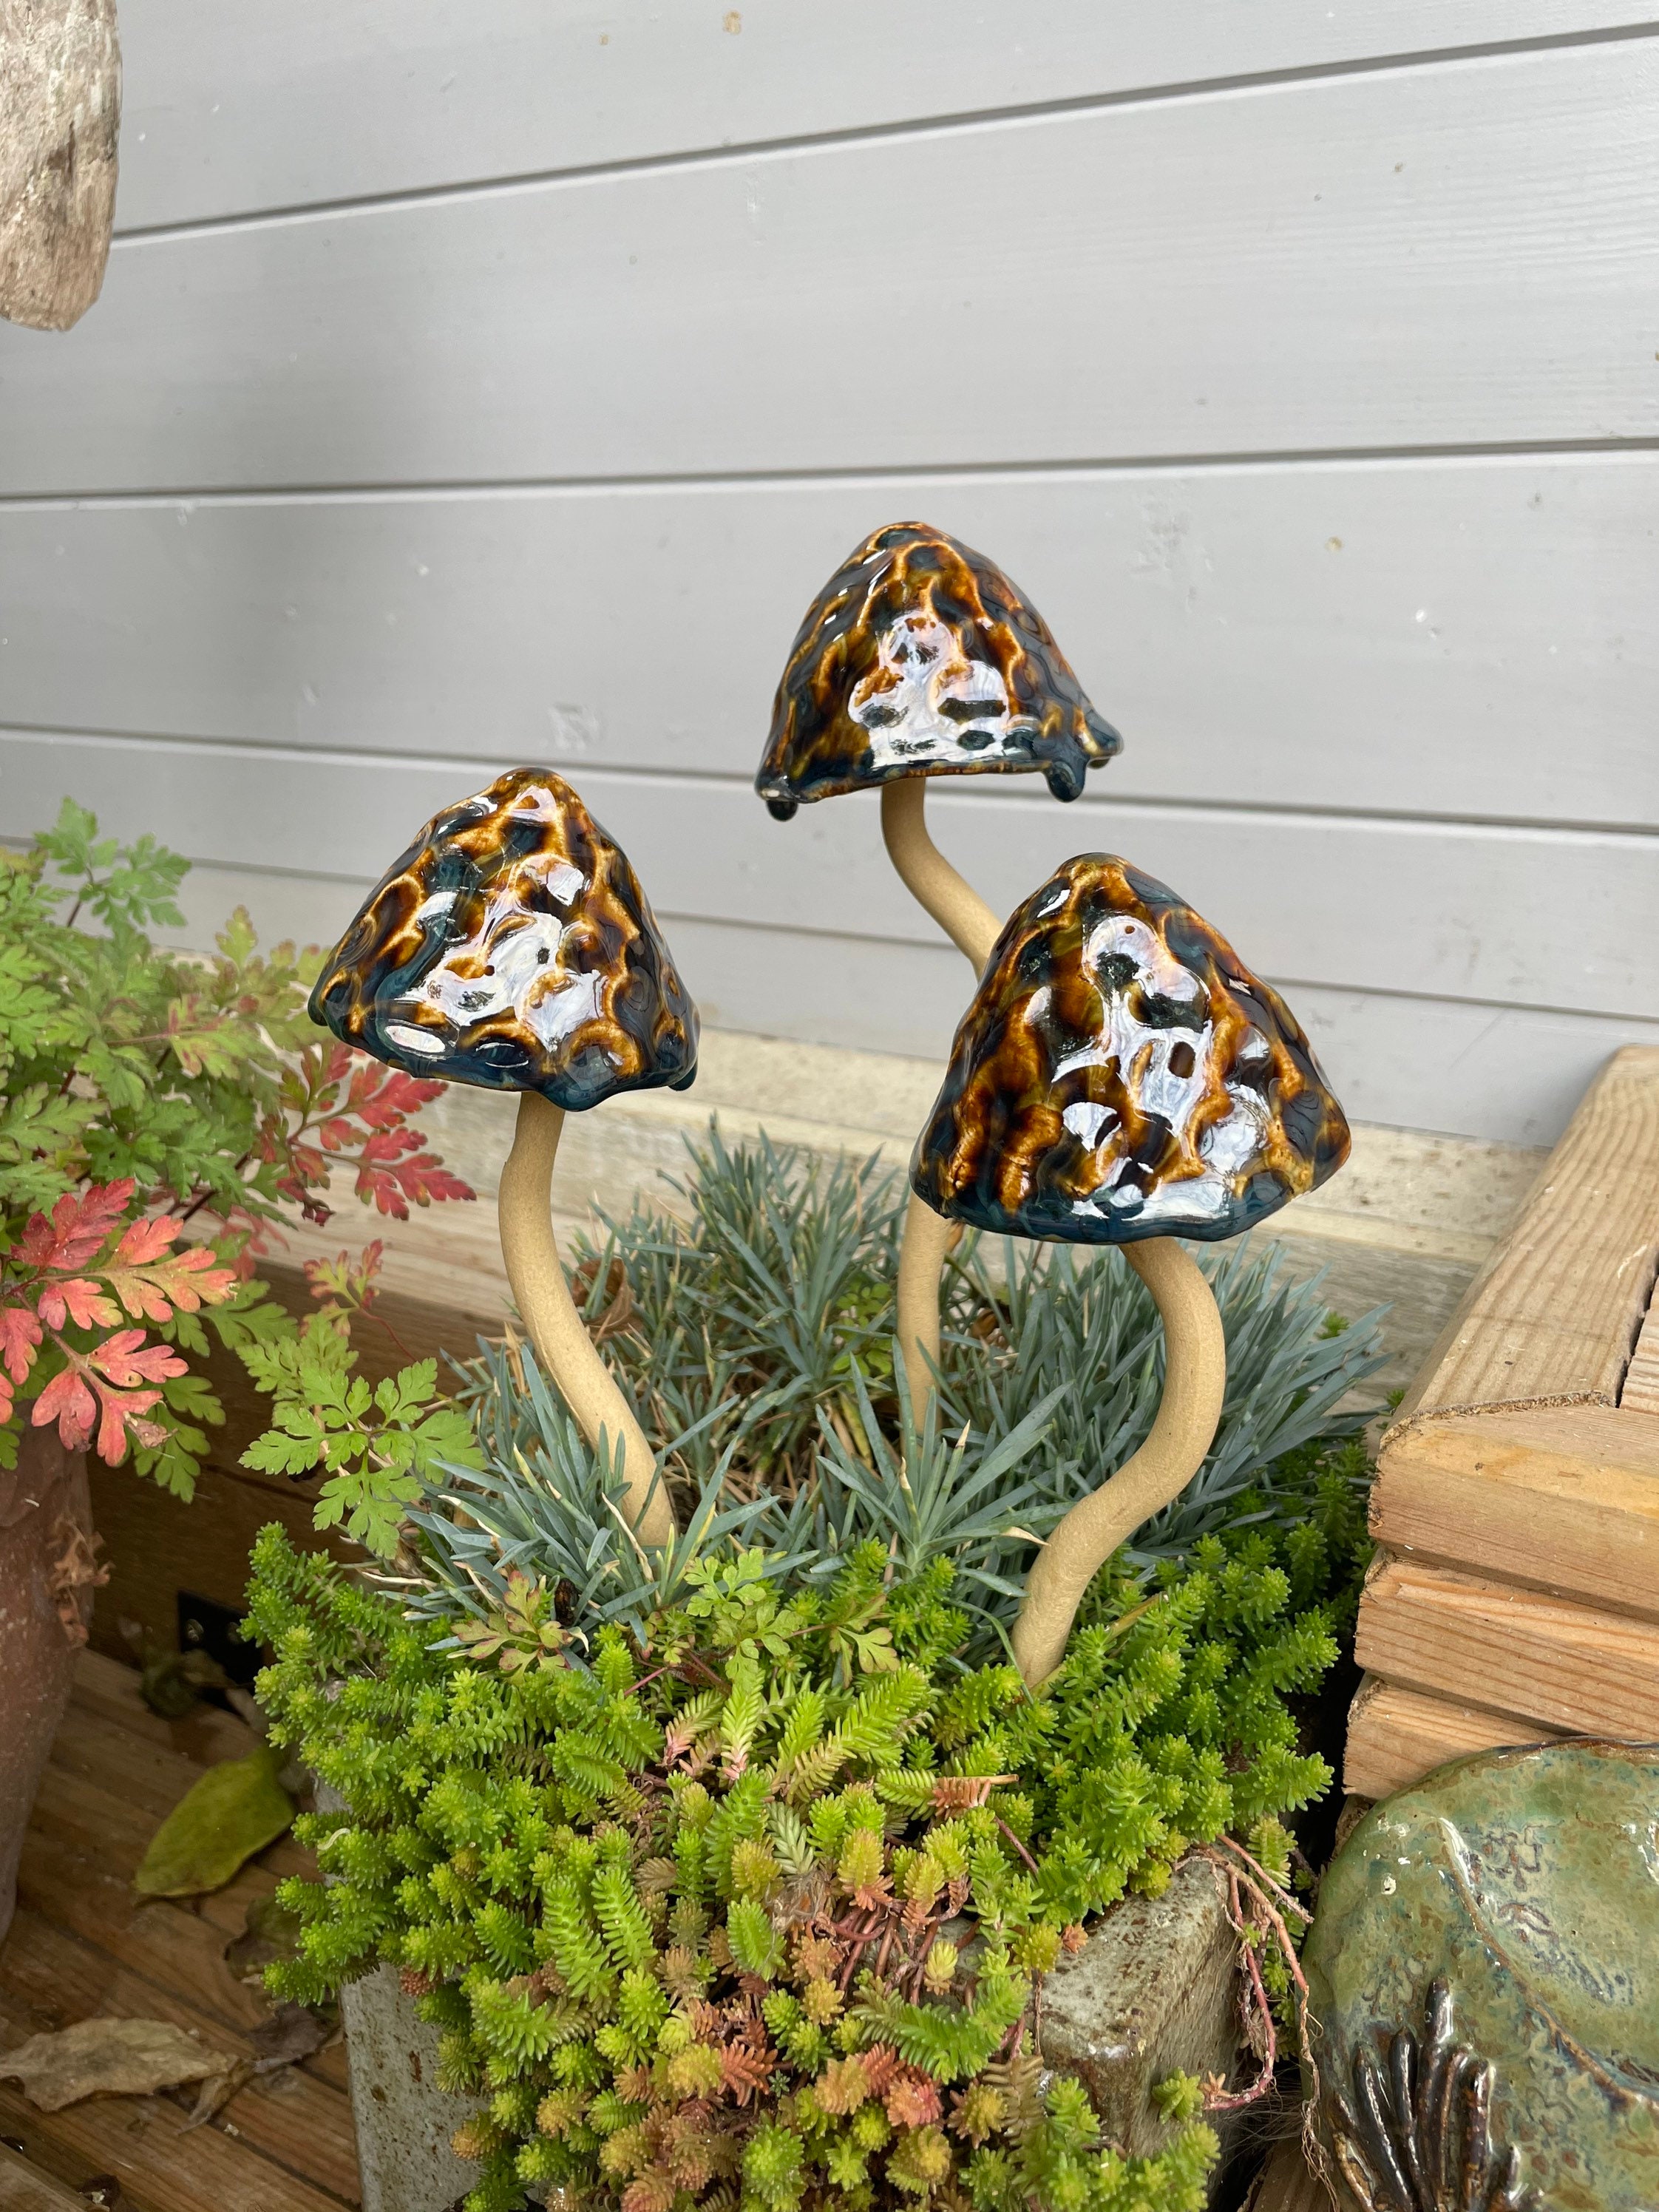 Bell Toadstools Garden Sculpture Find Wooden Mushrooms and